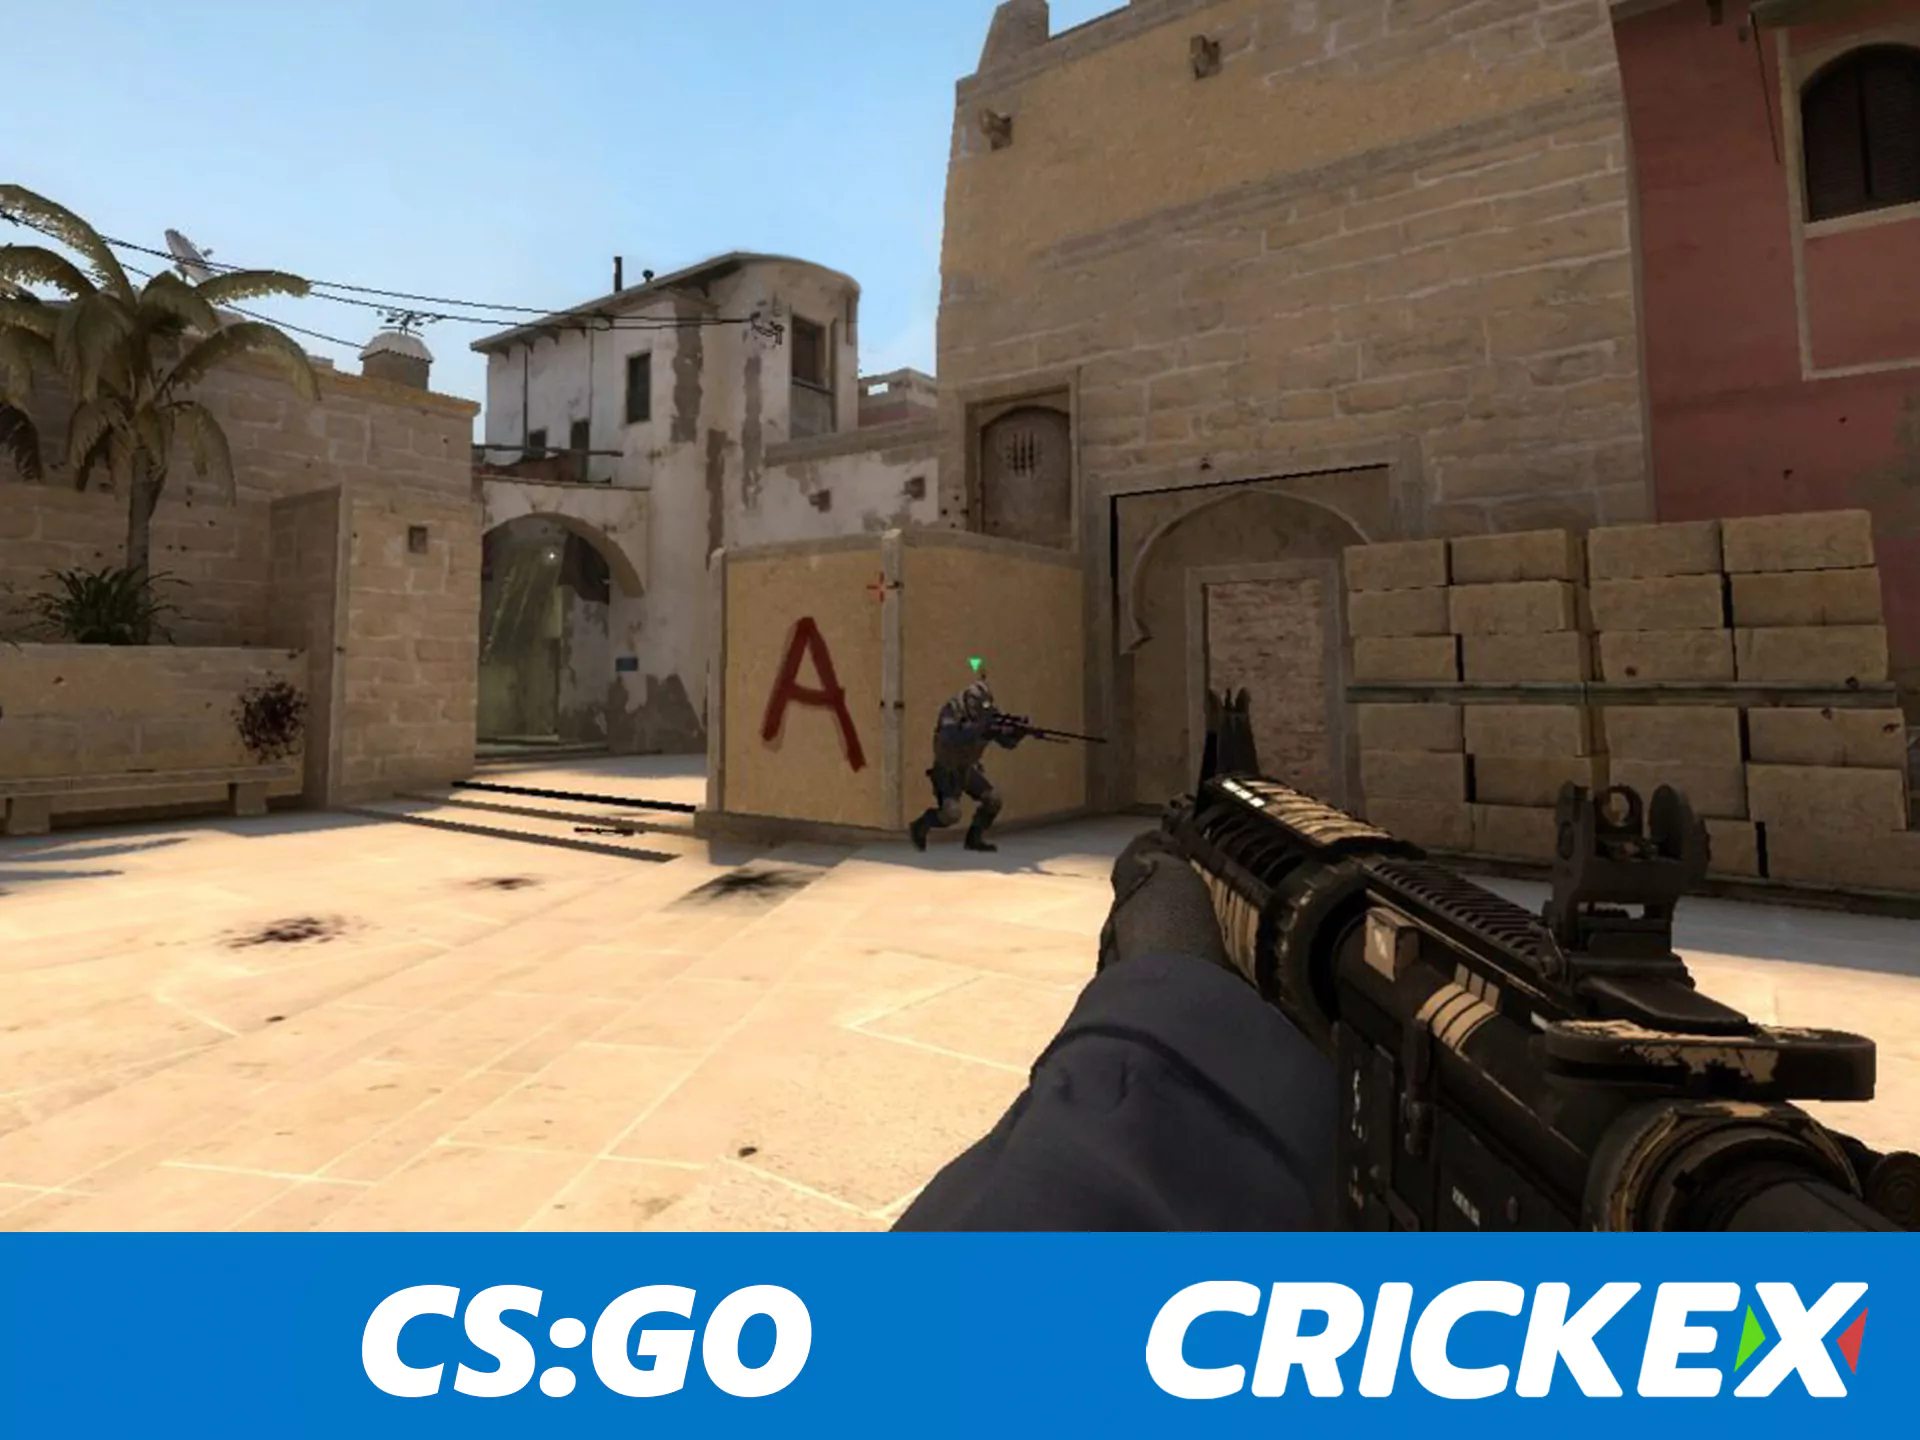 Crickex offers betting on CS:GO in India.